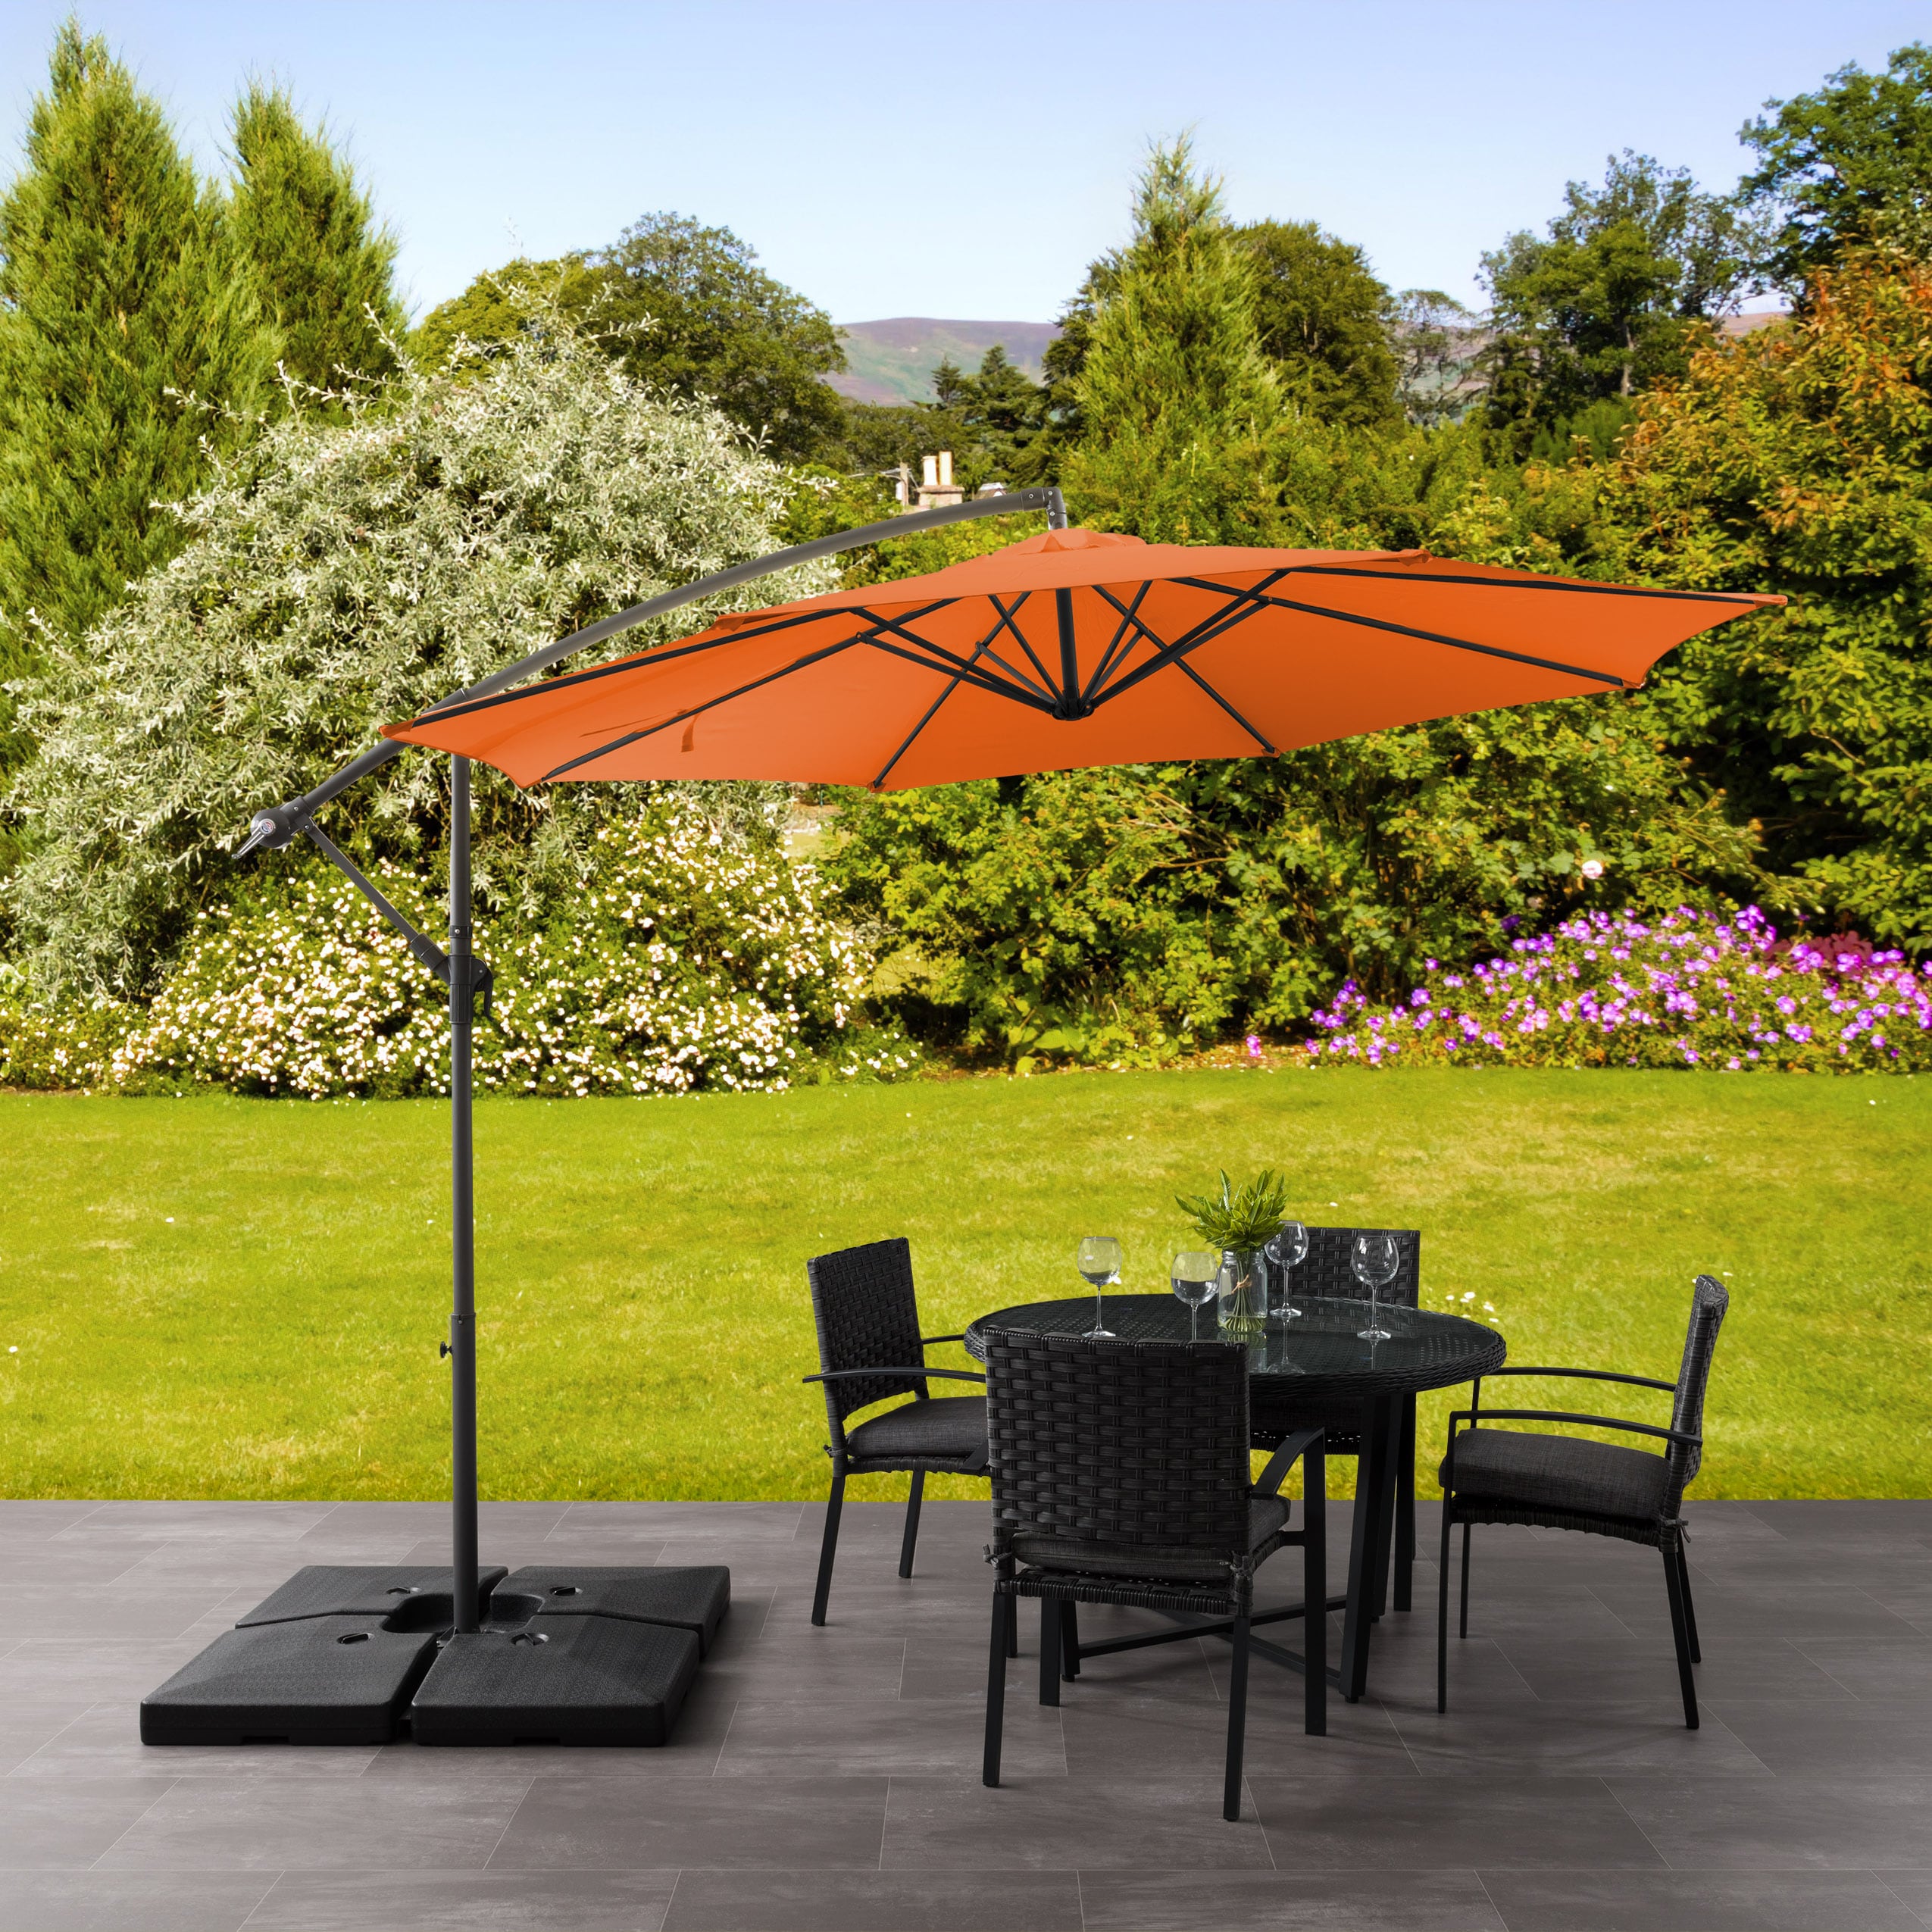 Picnic Table Coordinating Canopy Umbrella Tilting Option Beach Backyard Shade 